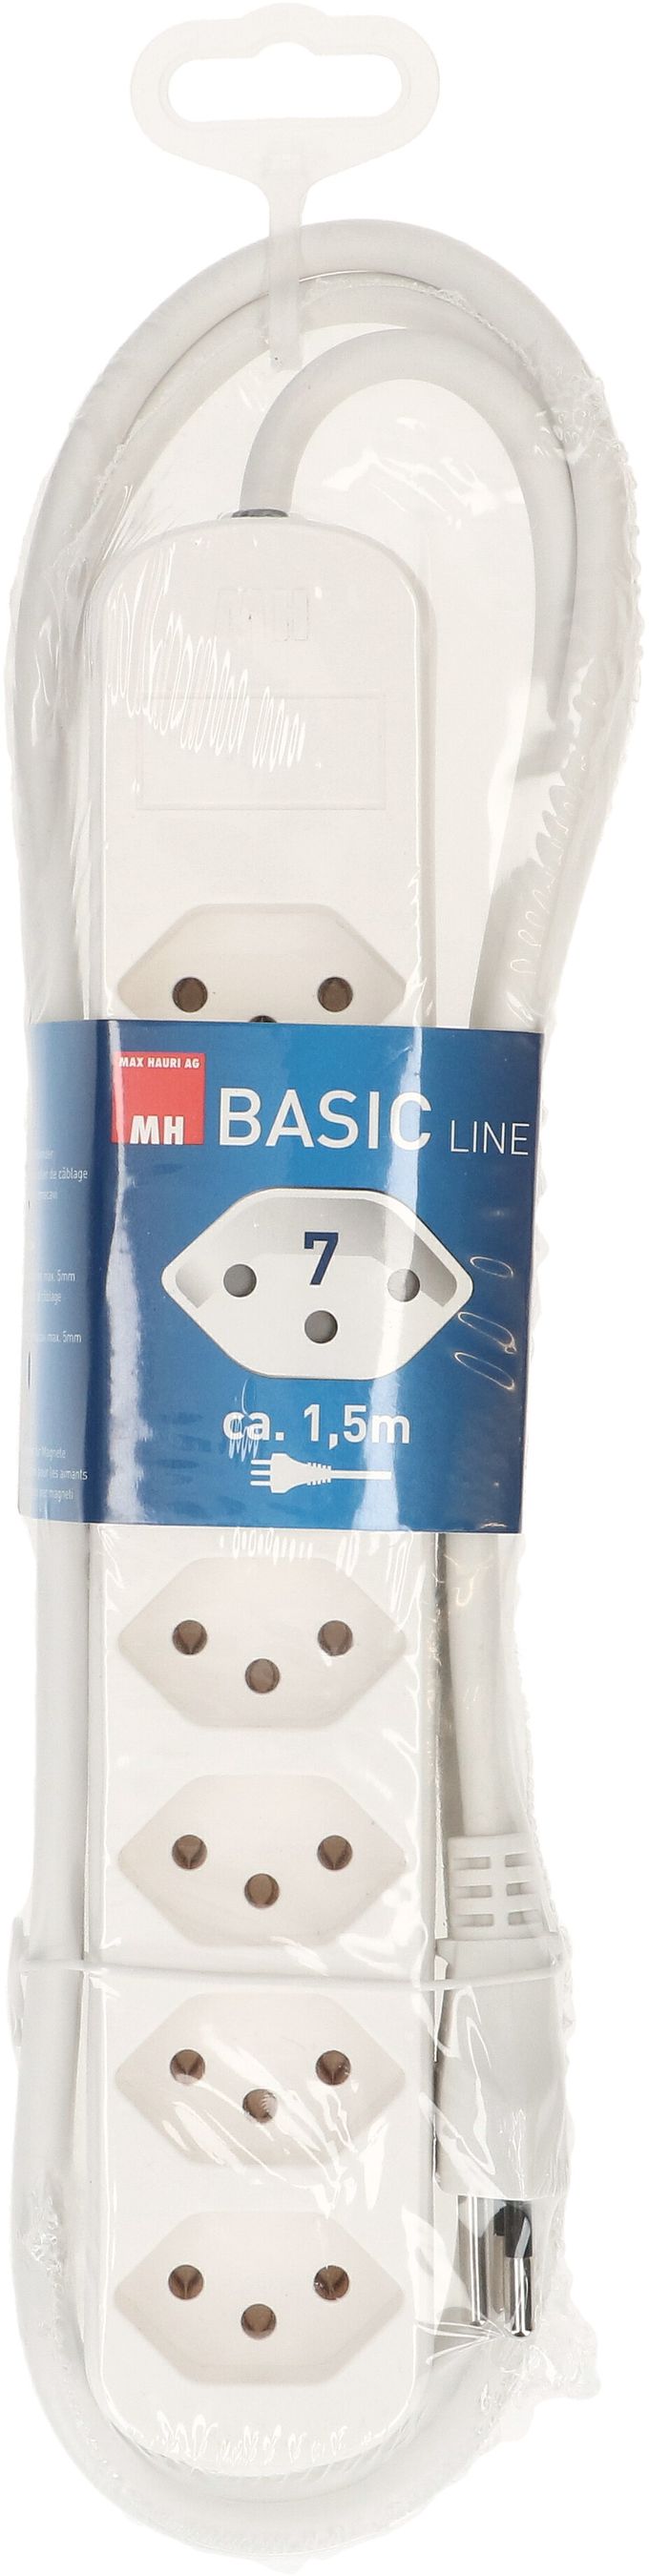 Steckdosenleiste Basic Line 7x Typ 13 weiss 1.5m